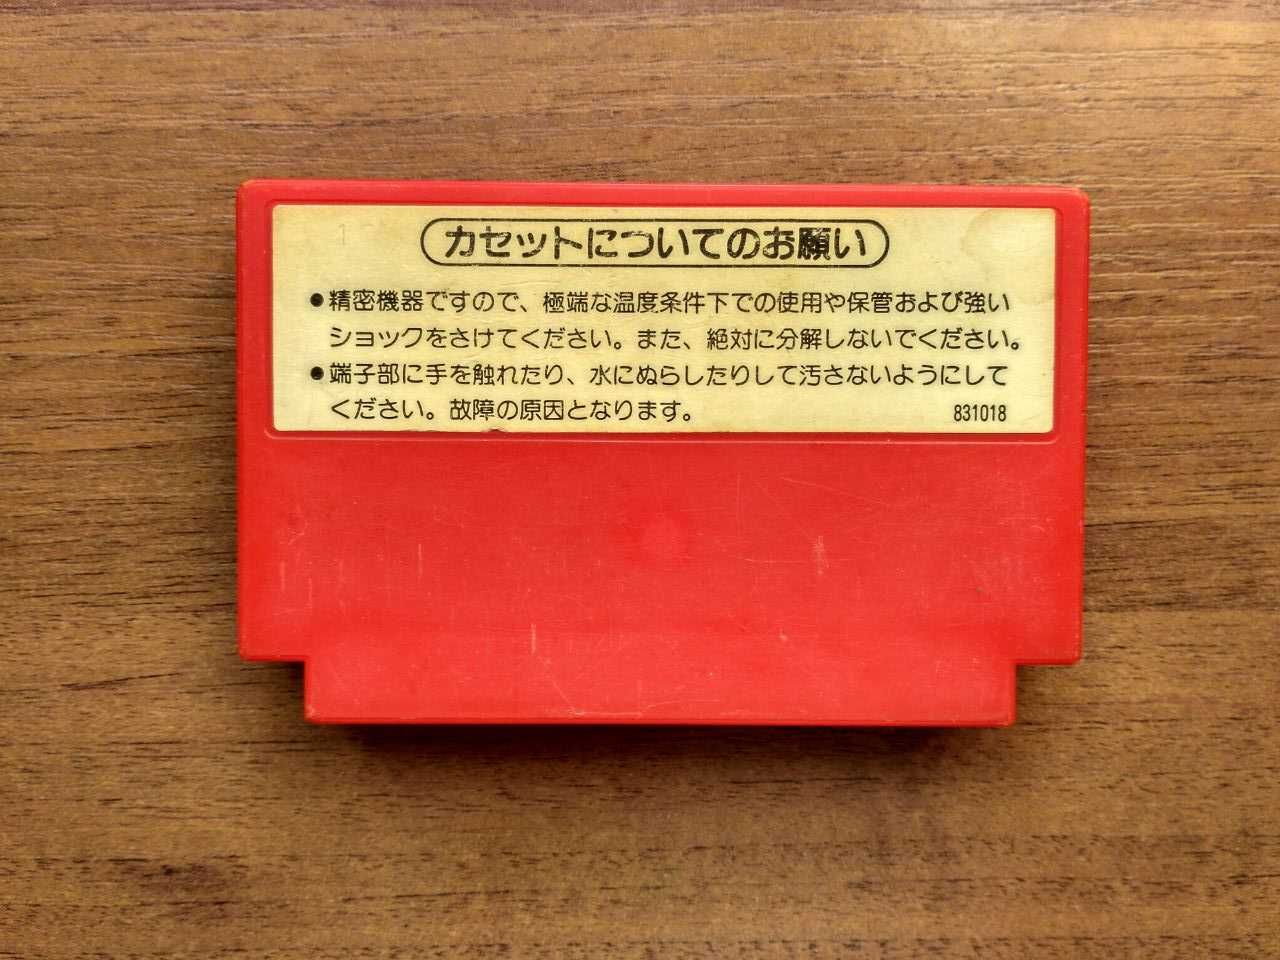 Картриджи Famicom (dendy, денди) Excite Bike